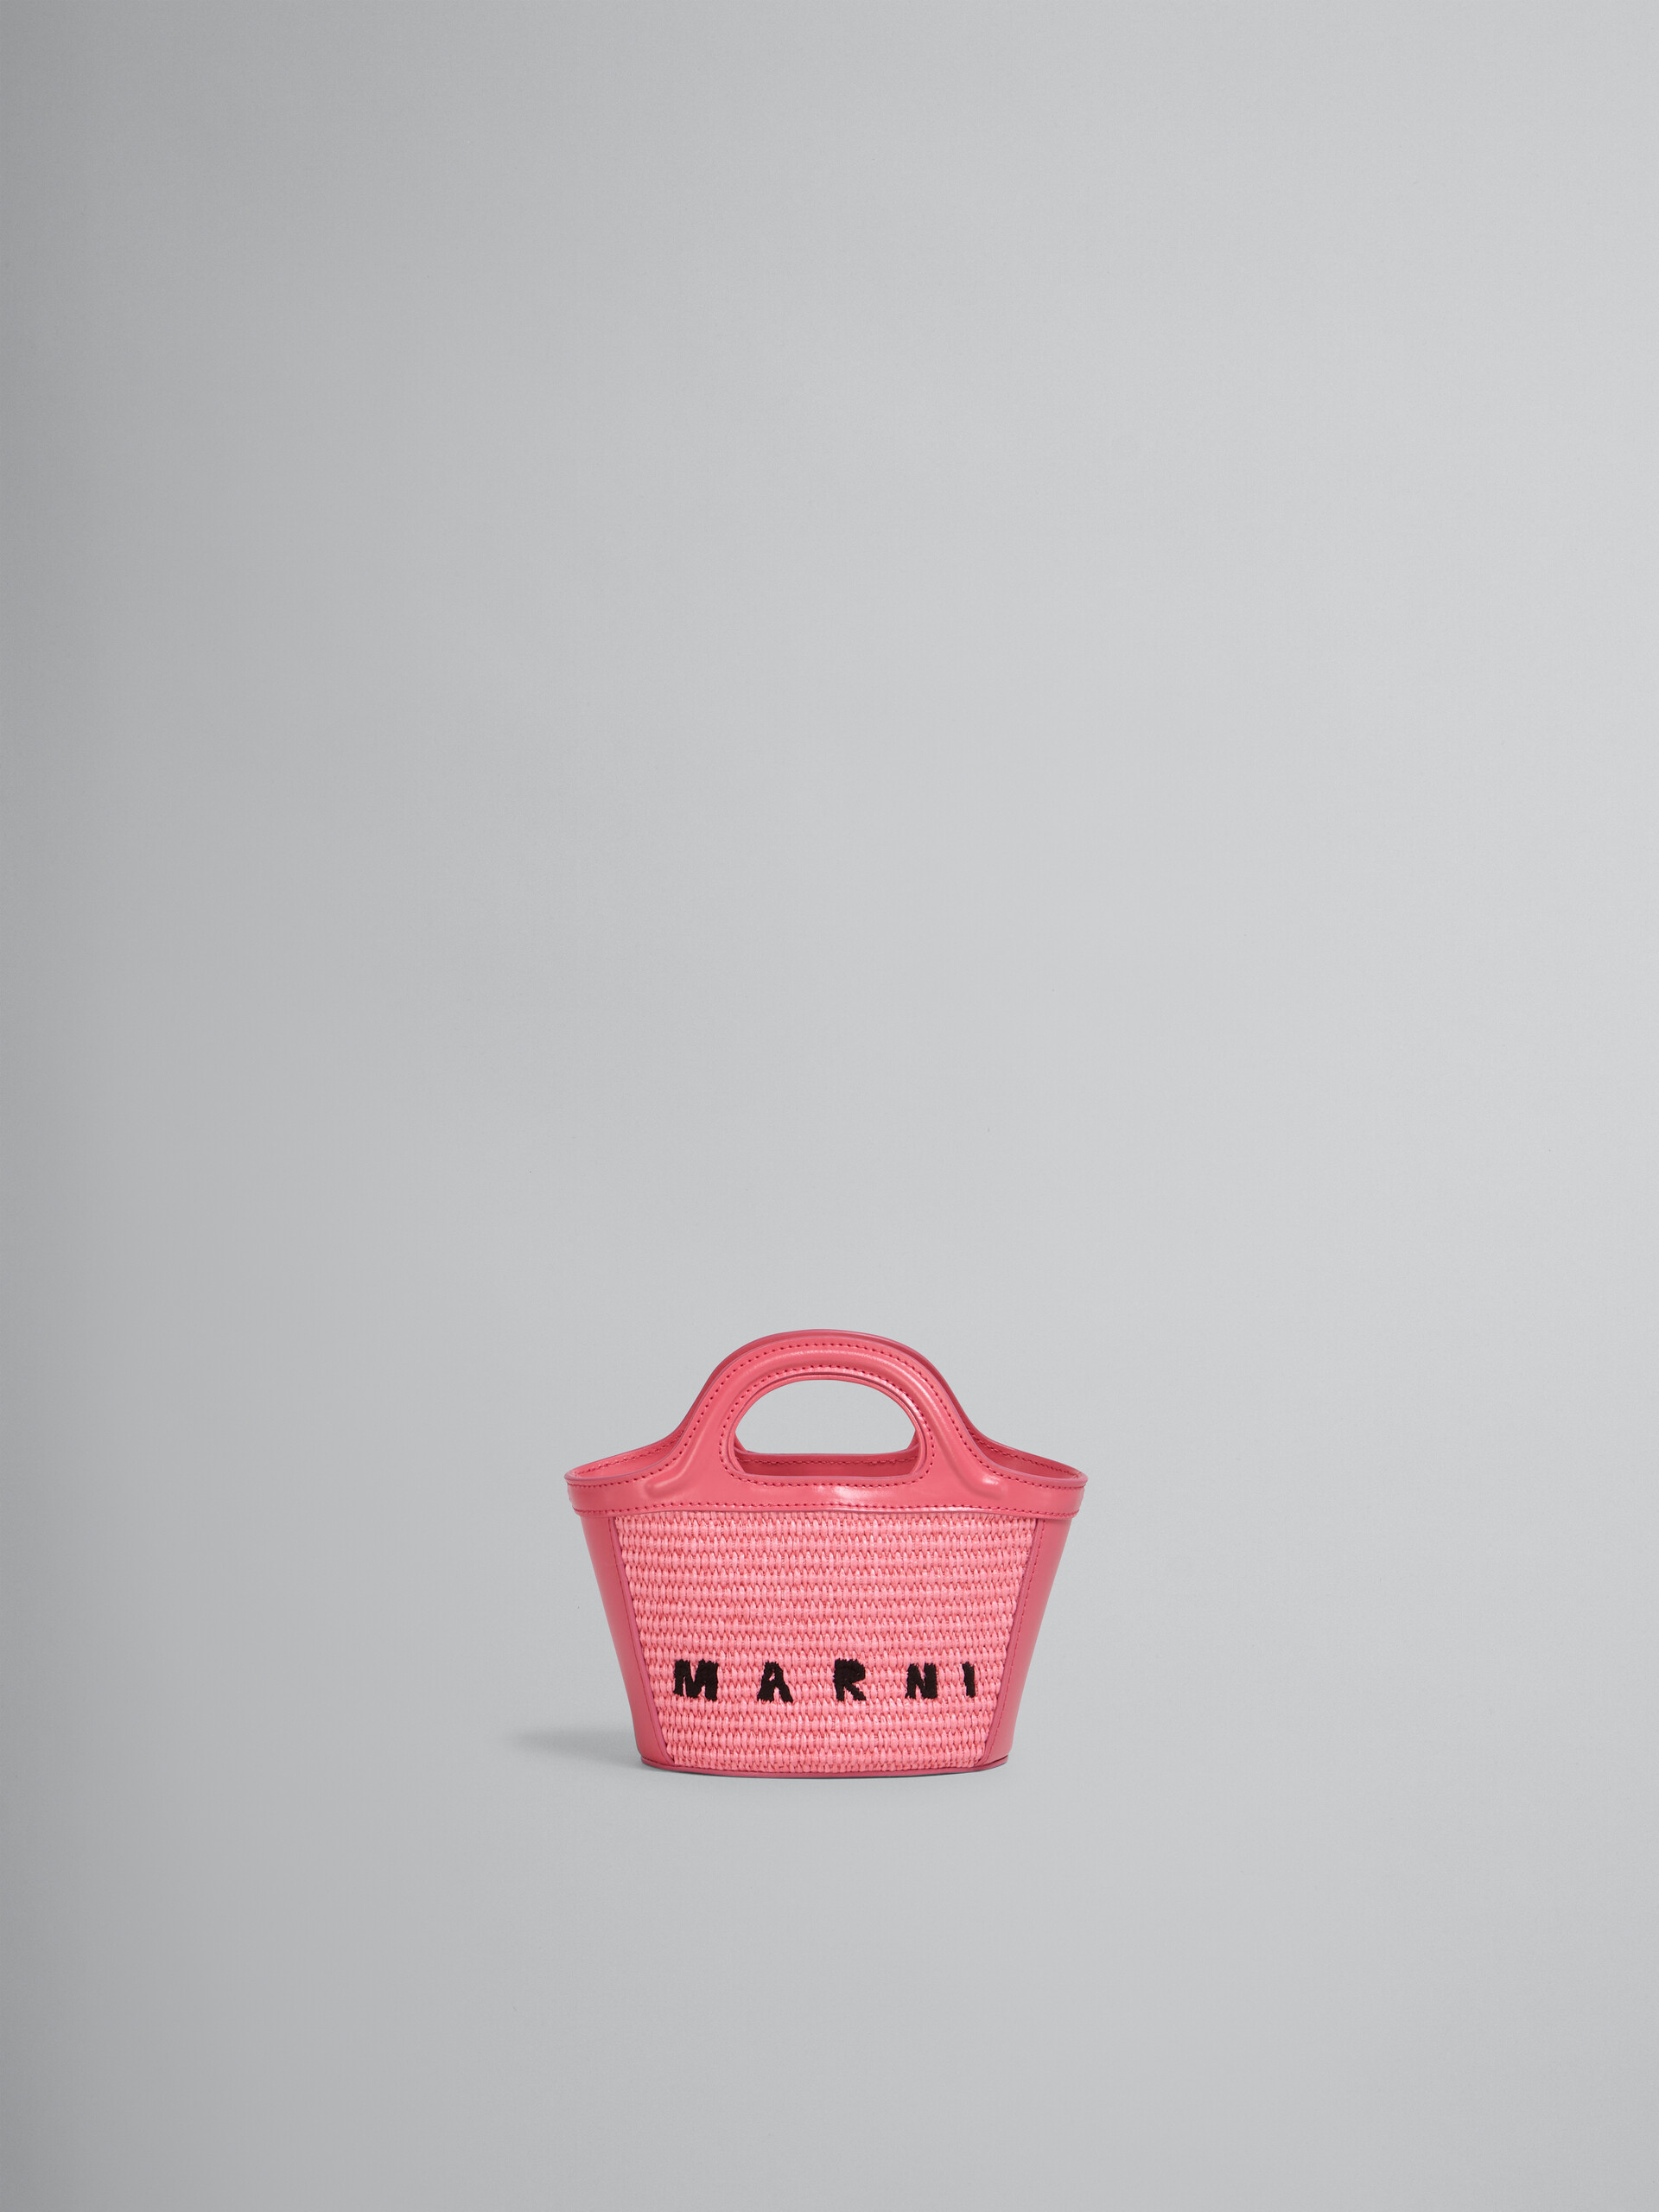 TROPICALIA micro bag in pink leather and raffia - Handbag - Image 1